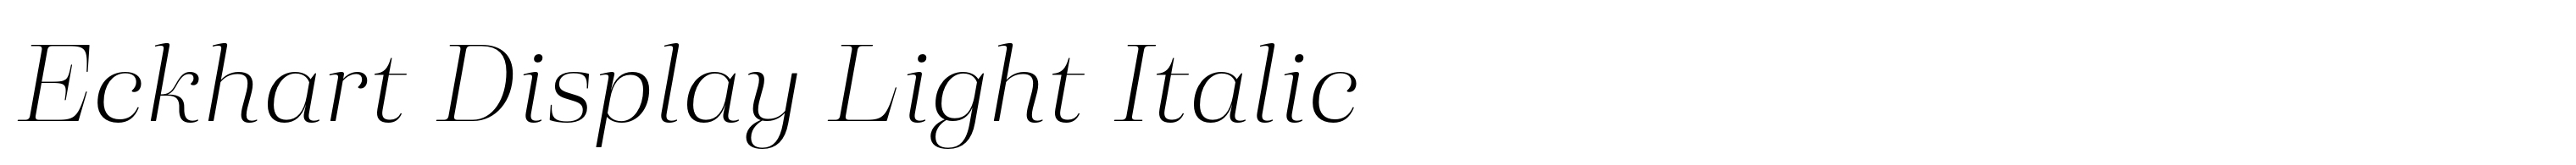 Eckhart Display Light Italic